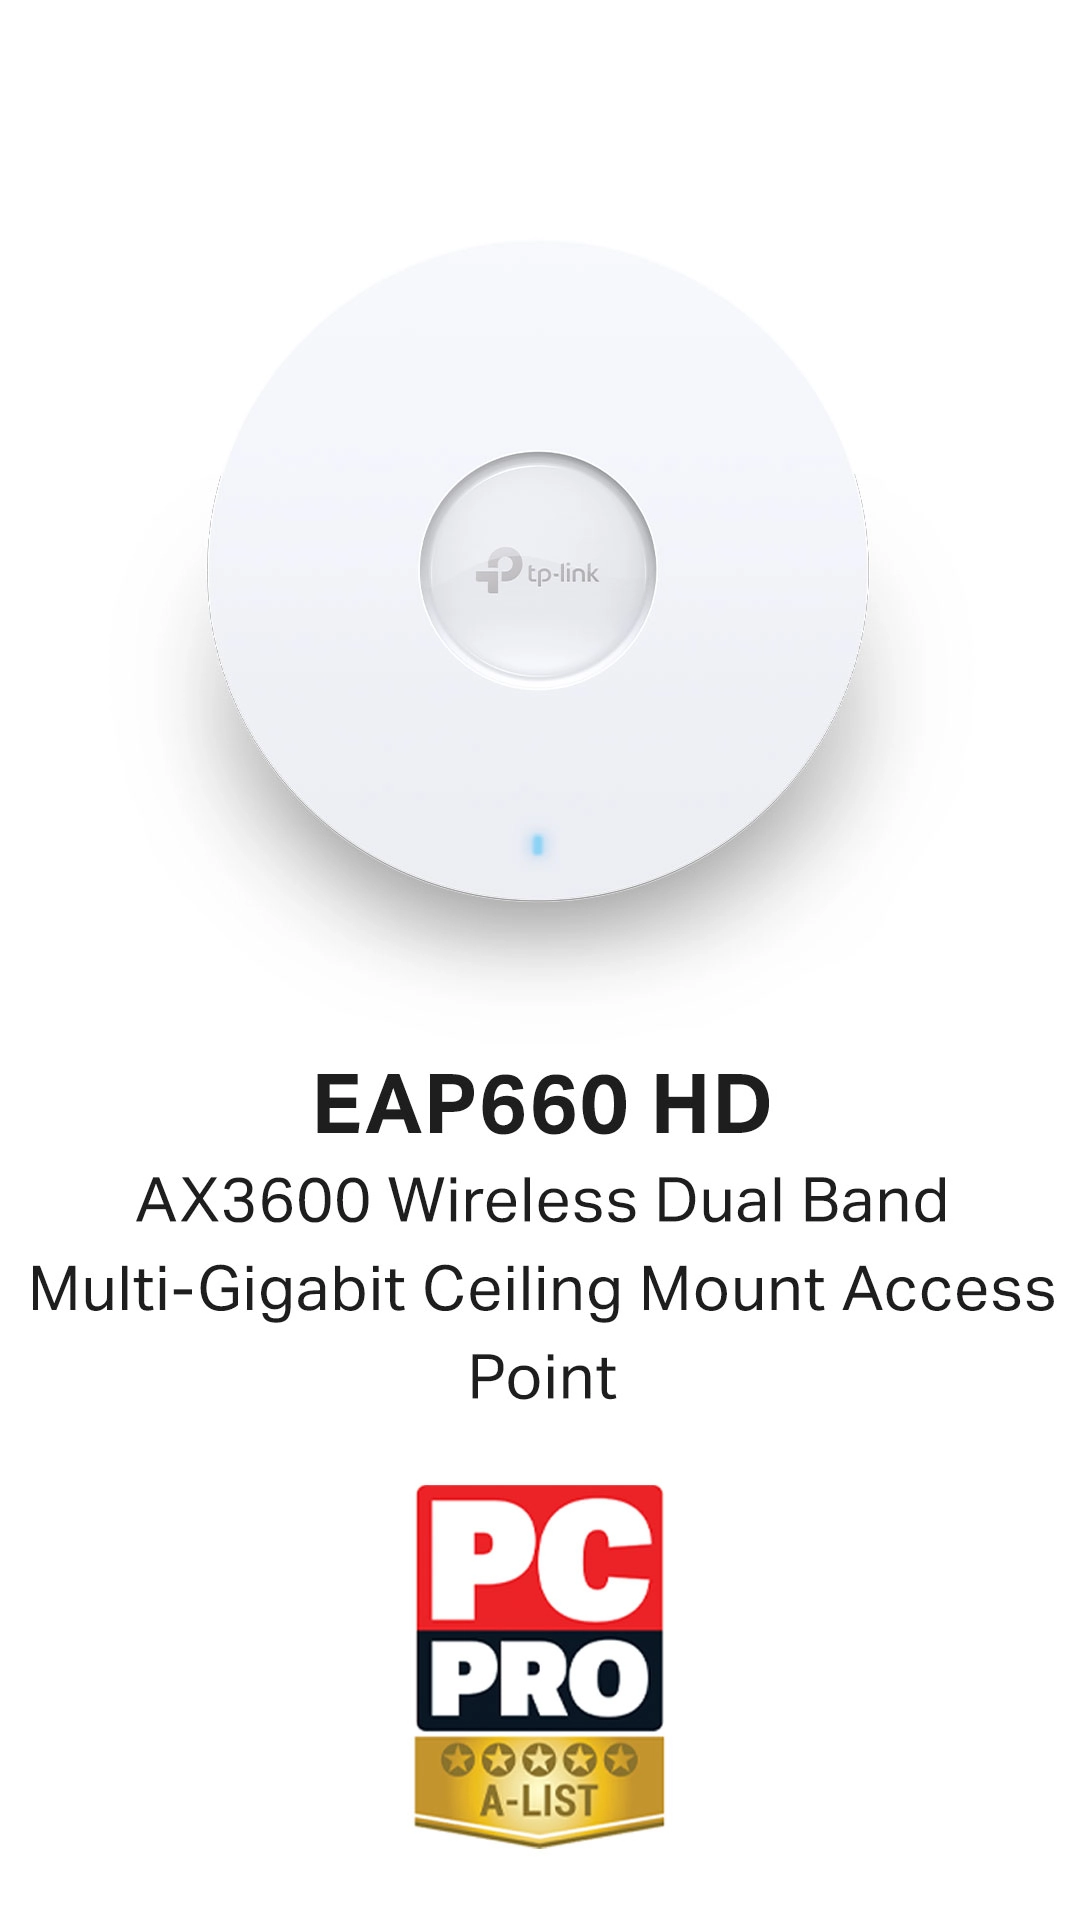 TP-LINK EAP660 HD AX3600 Wireless Dual Band Multi-Gigabit Ceiling Mount Access Point